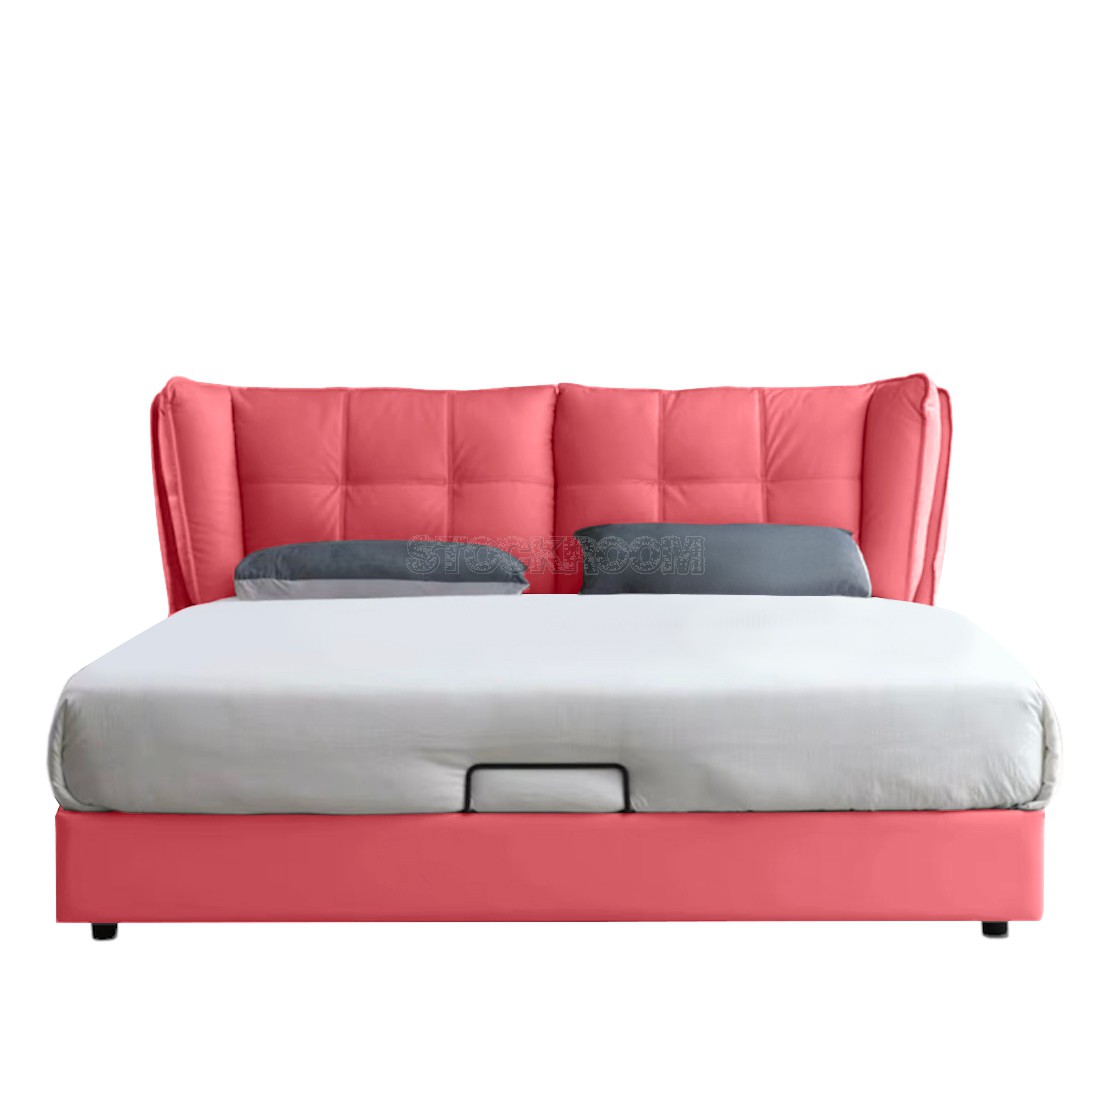 Moreno Fabric Upholstered Bed Frame